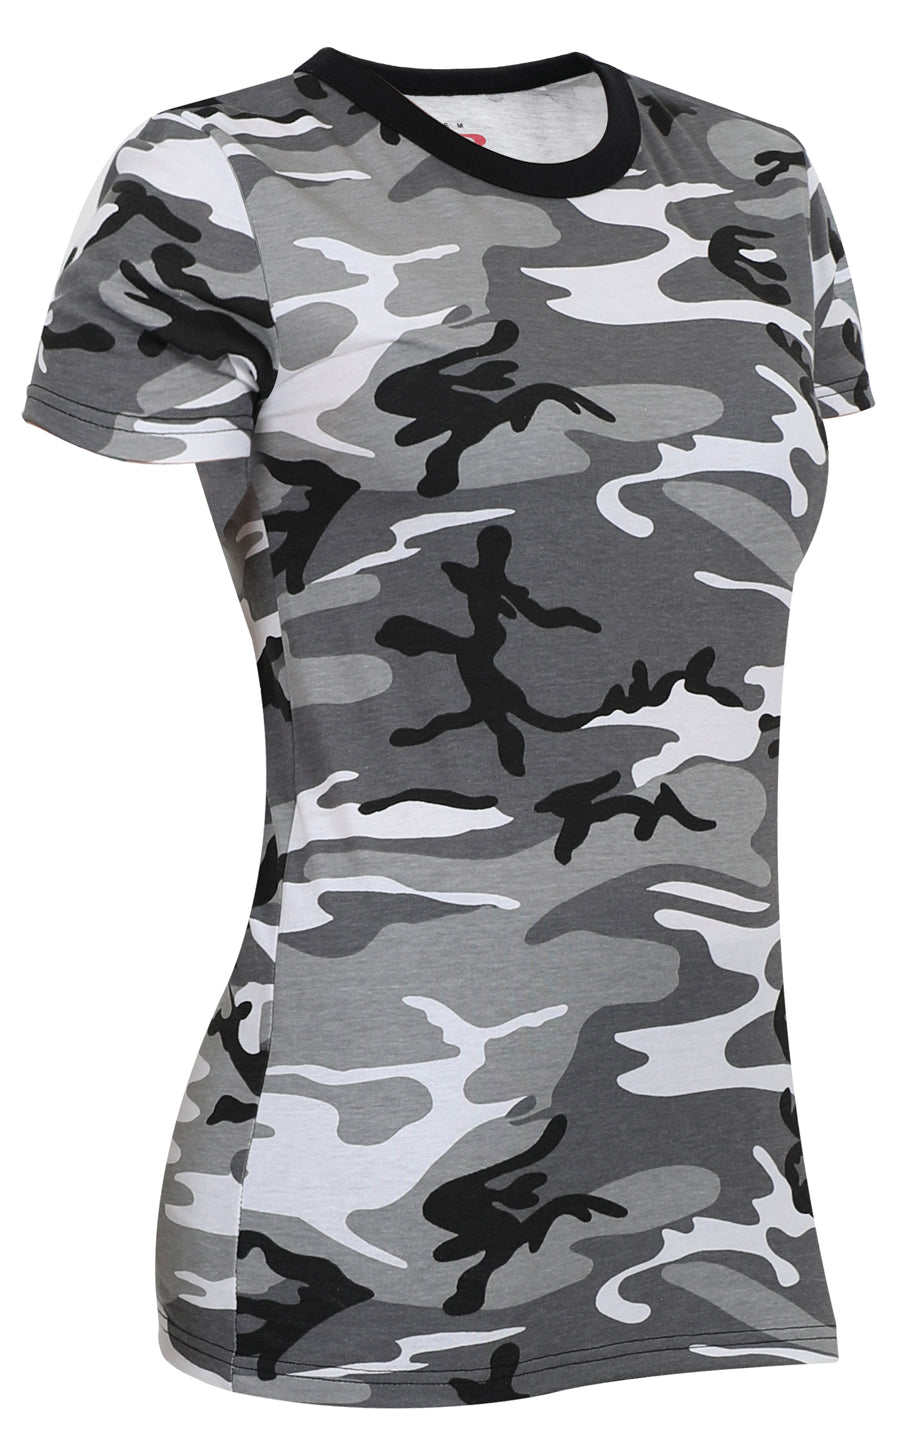 Milspec Womens Long Length Camo T-Shirt Camo T-Shirts MilTac Tactical Military Outdoor Gear Australia